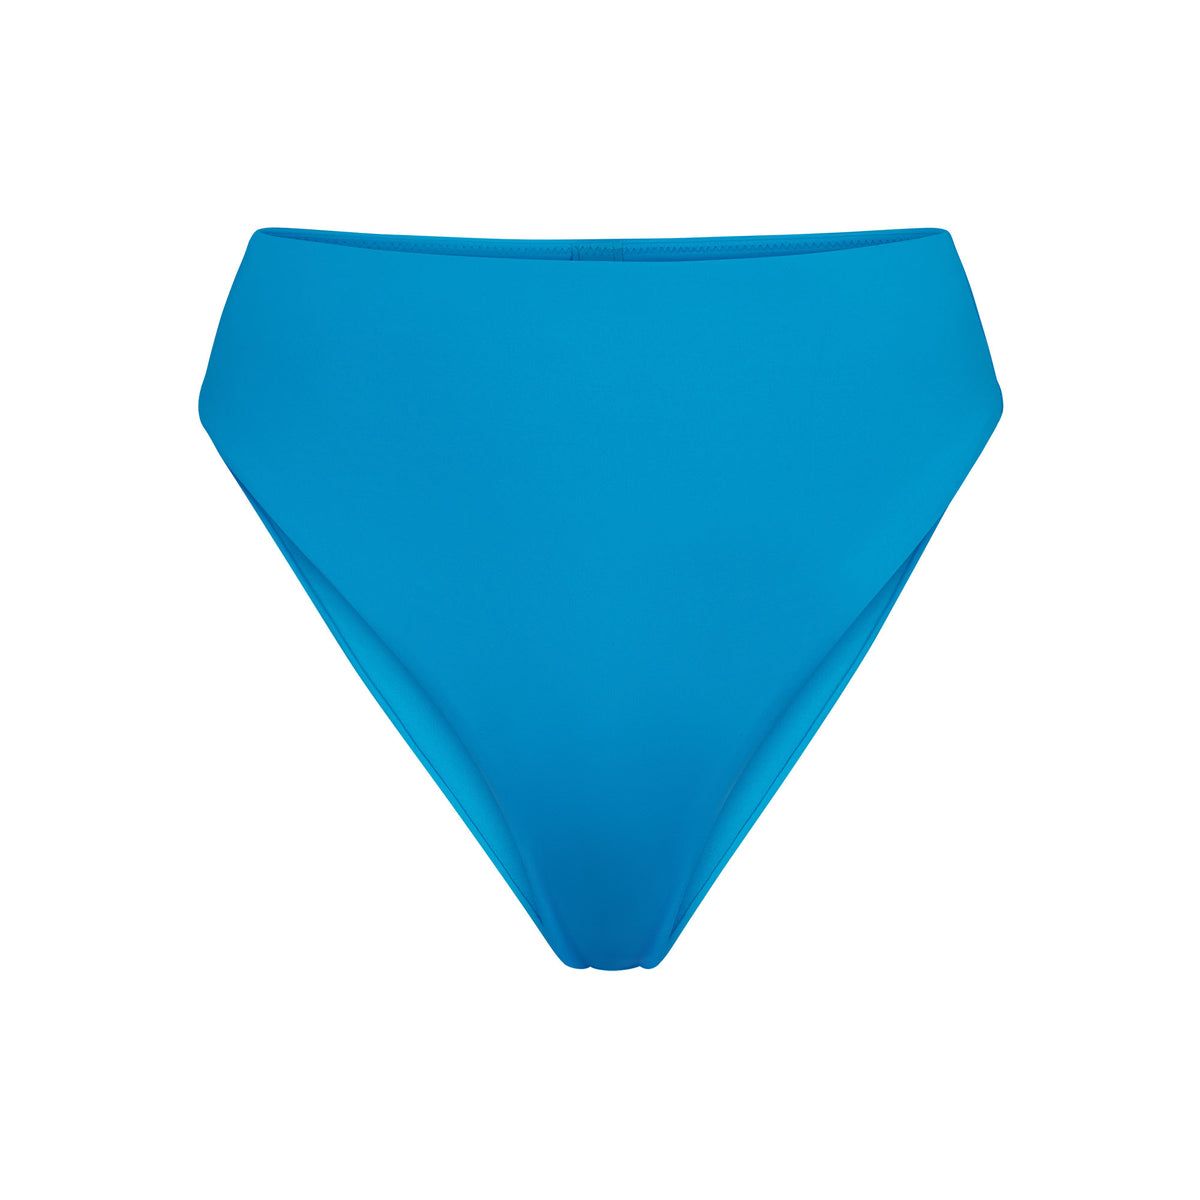 skims Swim Launch Party ✨ Congrats on the new collection @kimkardashian